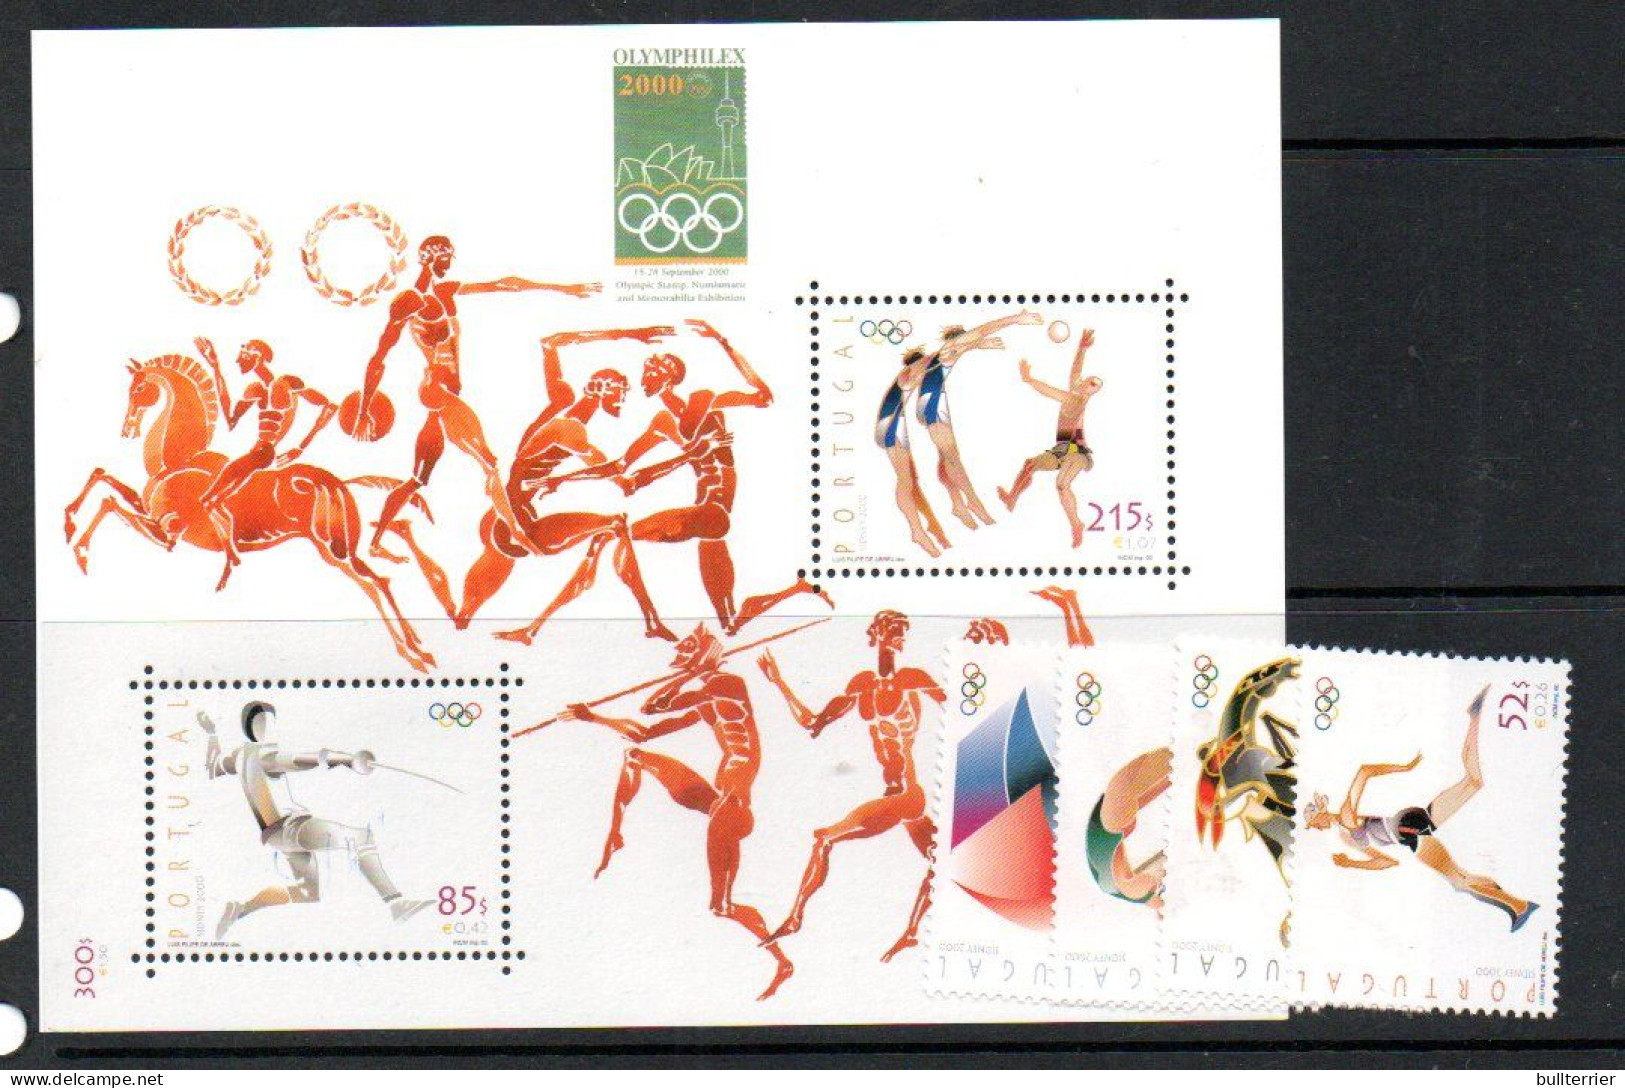 OLYMPICS - PORTUGAL  - 2000 - SYDNEY OLYMPICS SET OF 4 + SOUVENIR SHEET MINT NEVER HINGED  SG CAT £9+ - Sommer 2000: Sydney